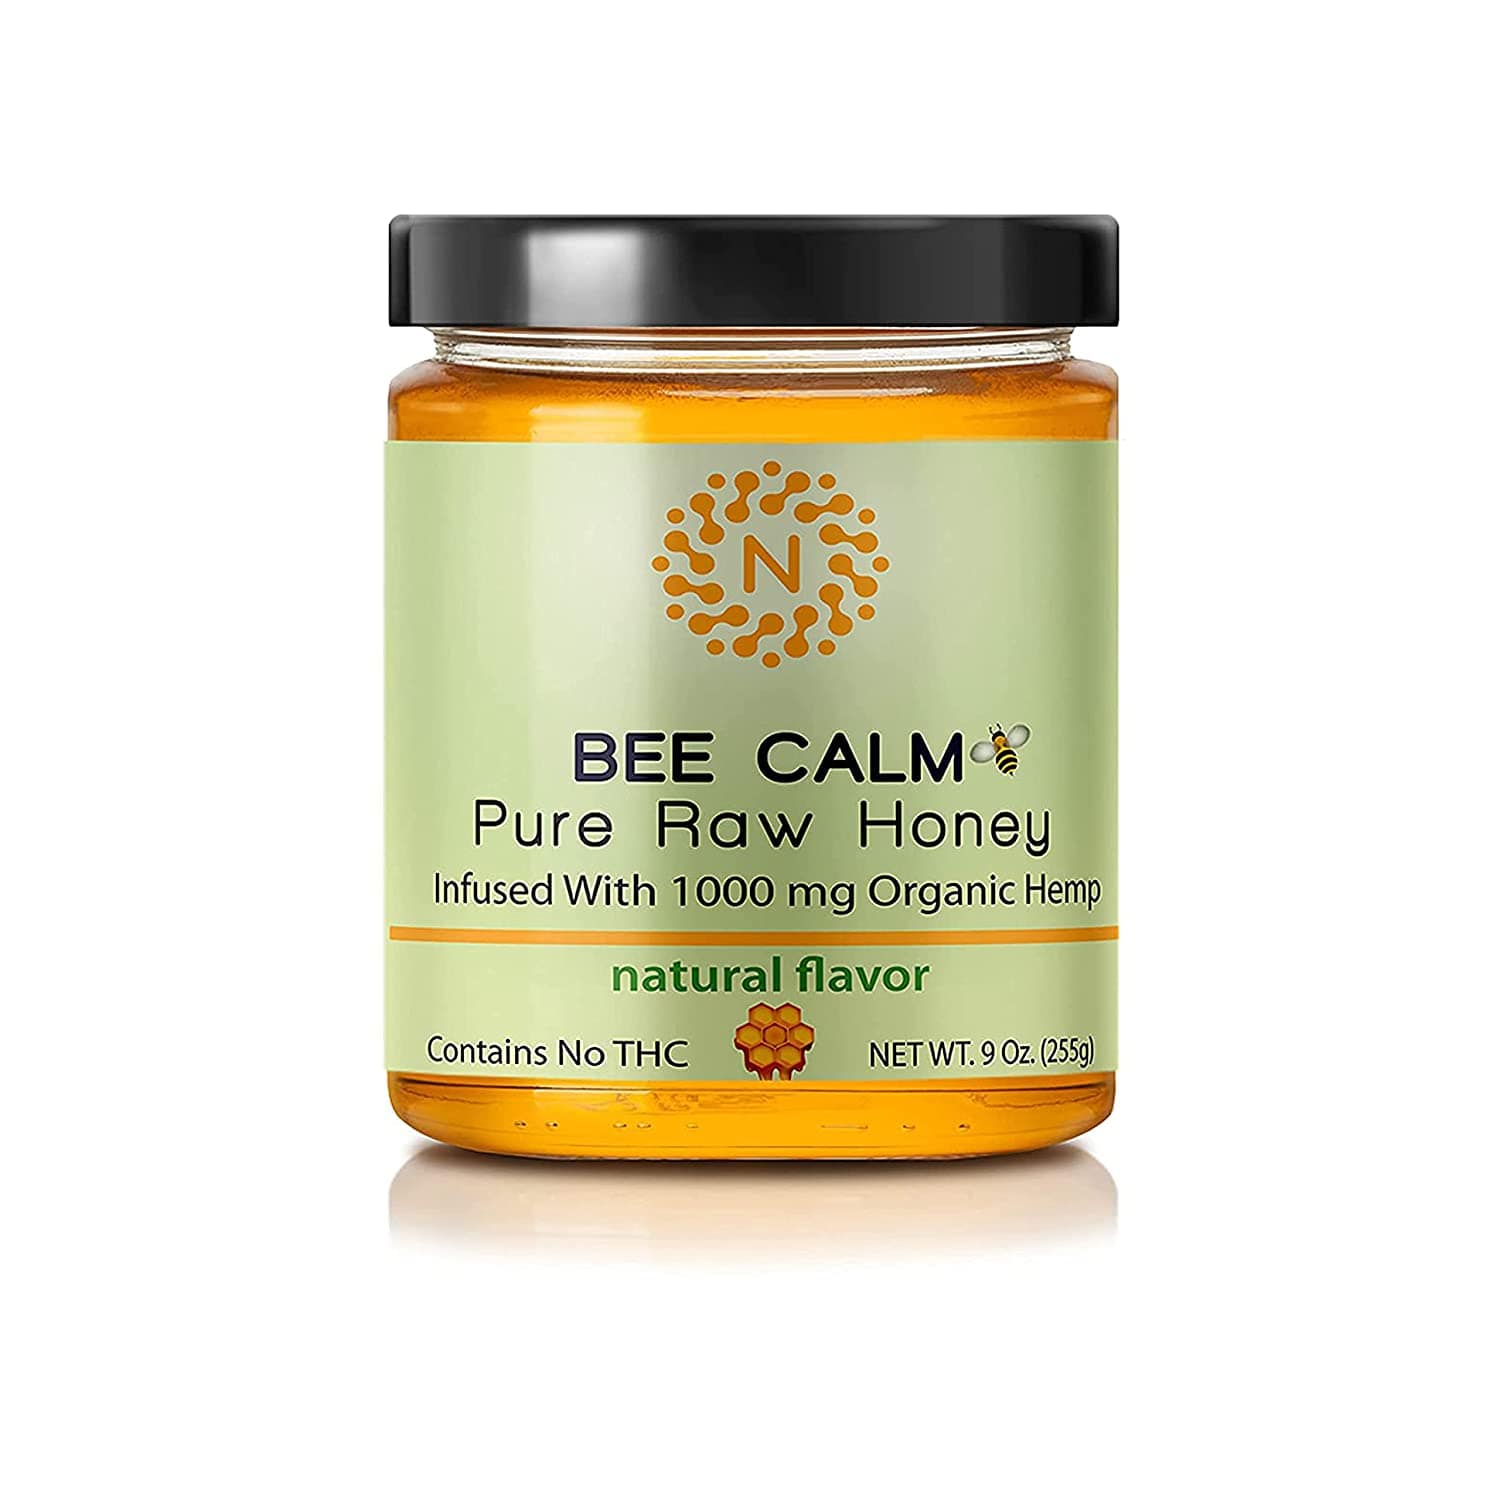 "Bee Calm" Pure Raw Honey